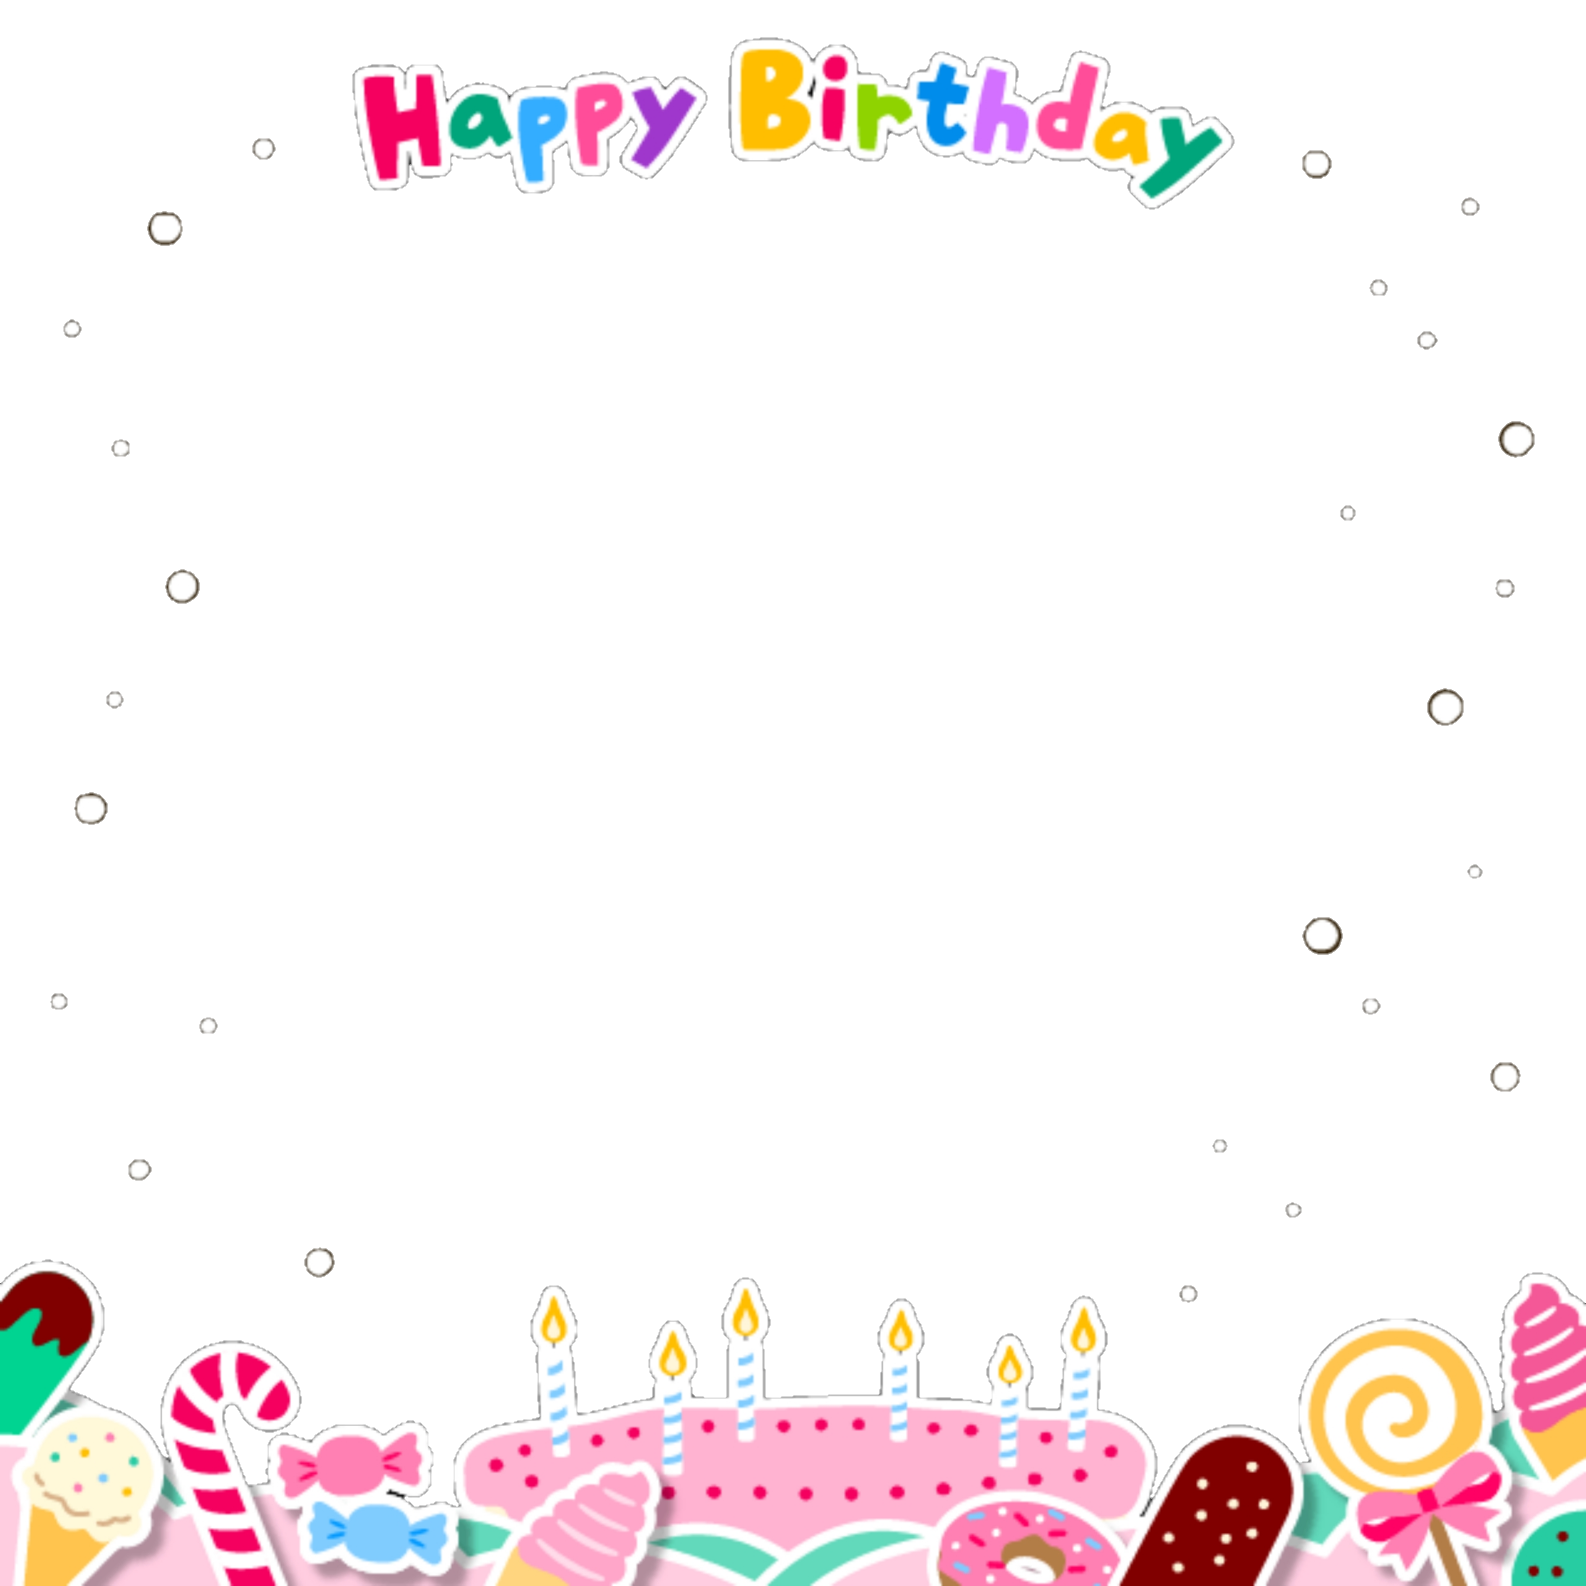 frame square instagram balloons birthday heart love... - 1024 x 1024 png 298kB